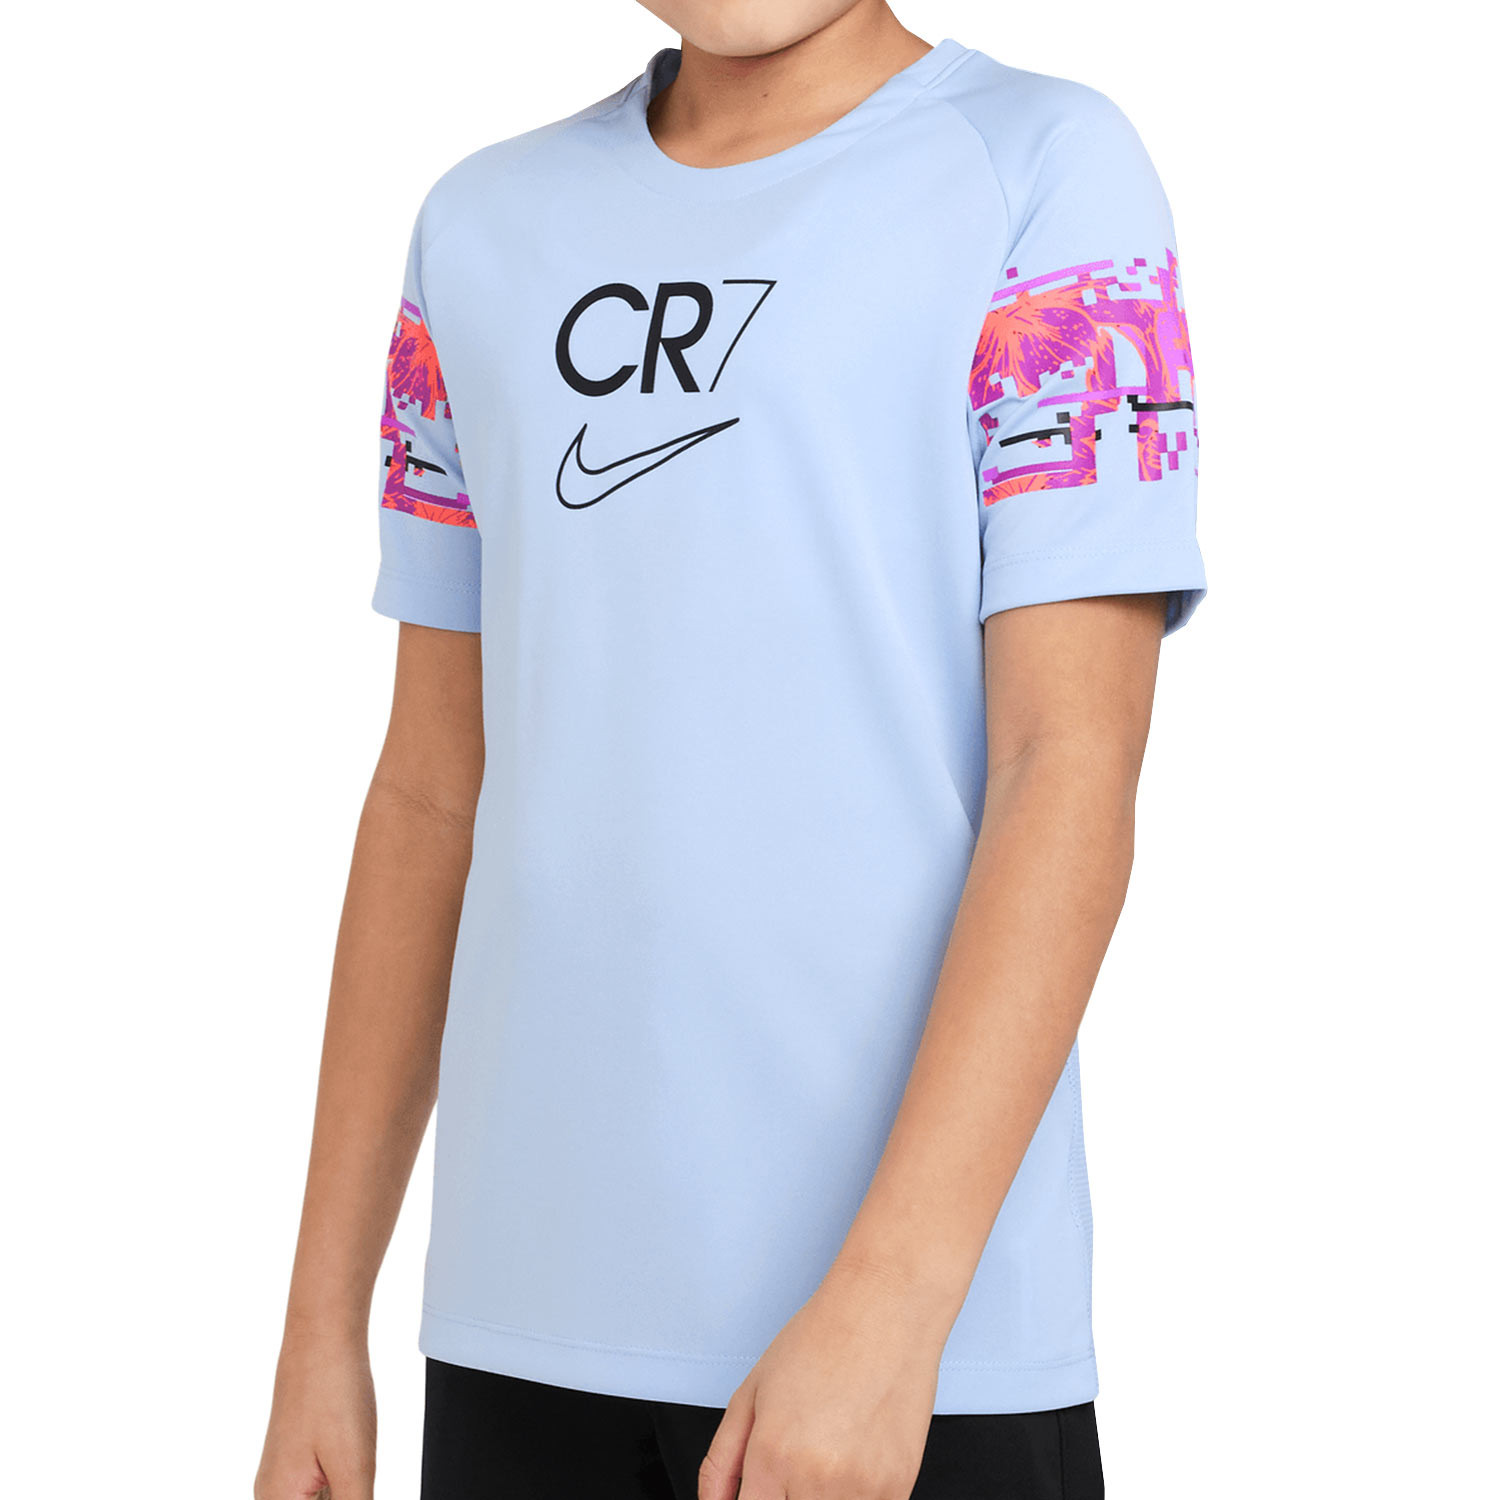 Camiseta Nike CR7 niño azul claro|